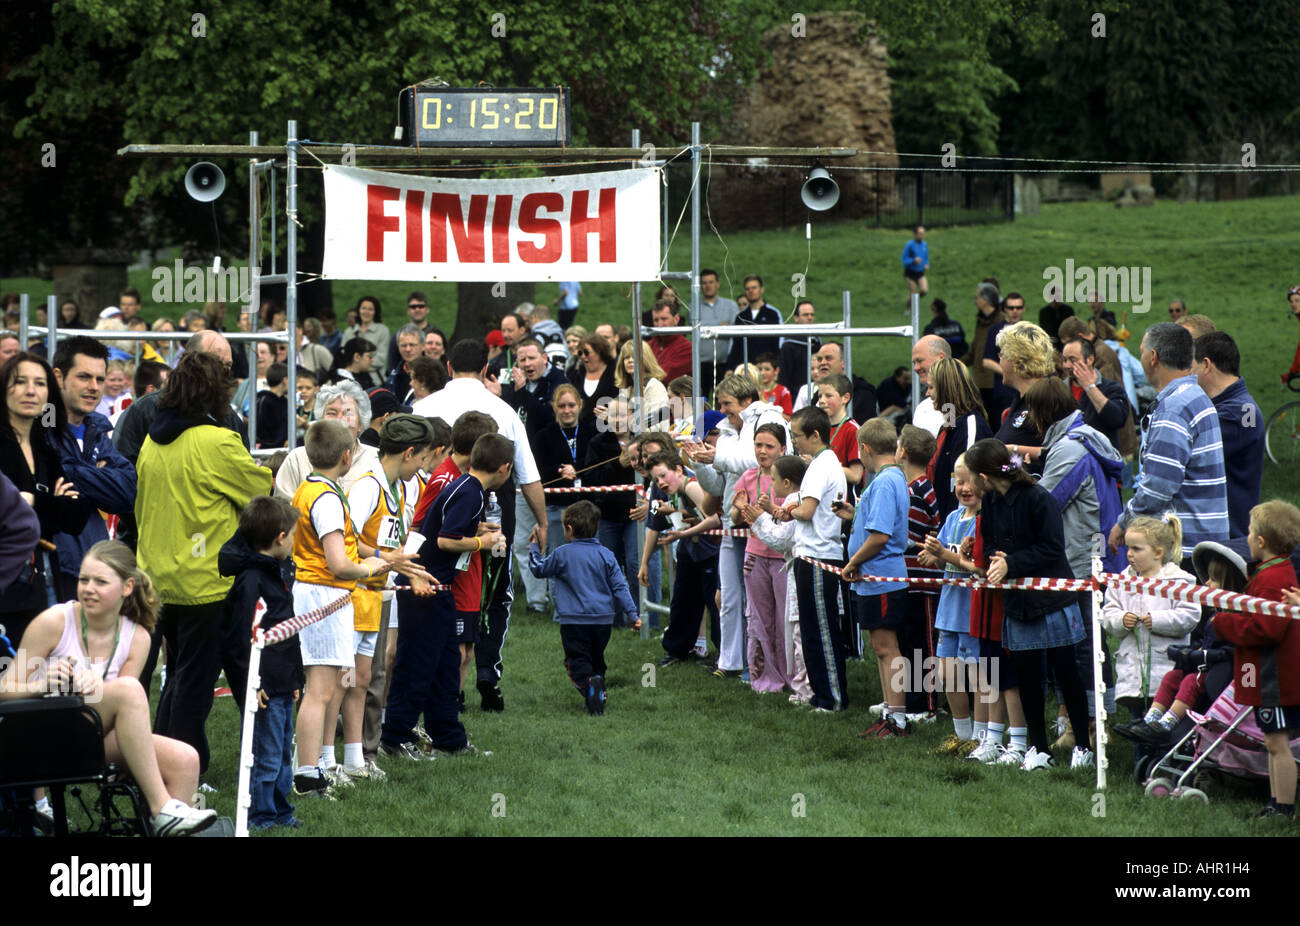 Fun run finishing funnel with people applauding finishers, at Abbey Fields, Kenilworth, Warwickshire, England, UK Stock Photo